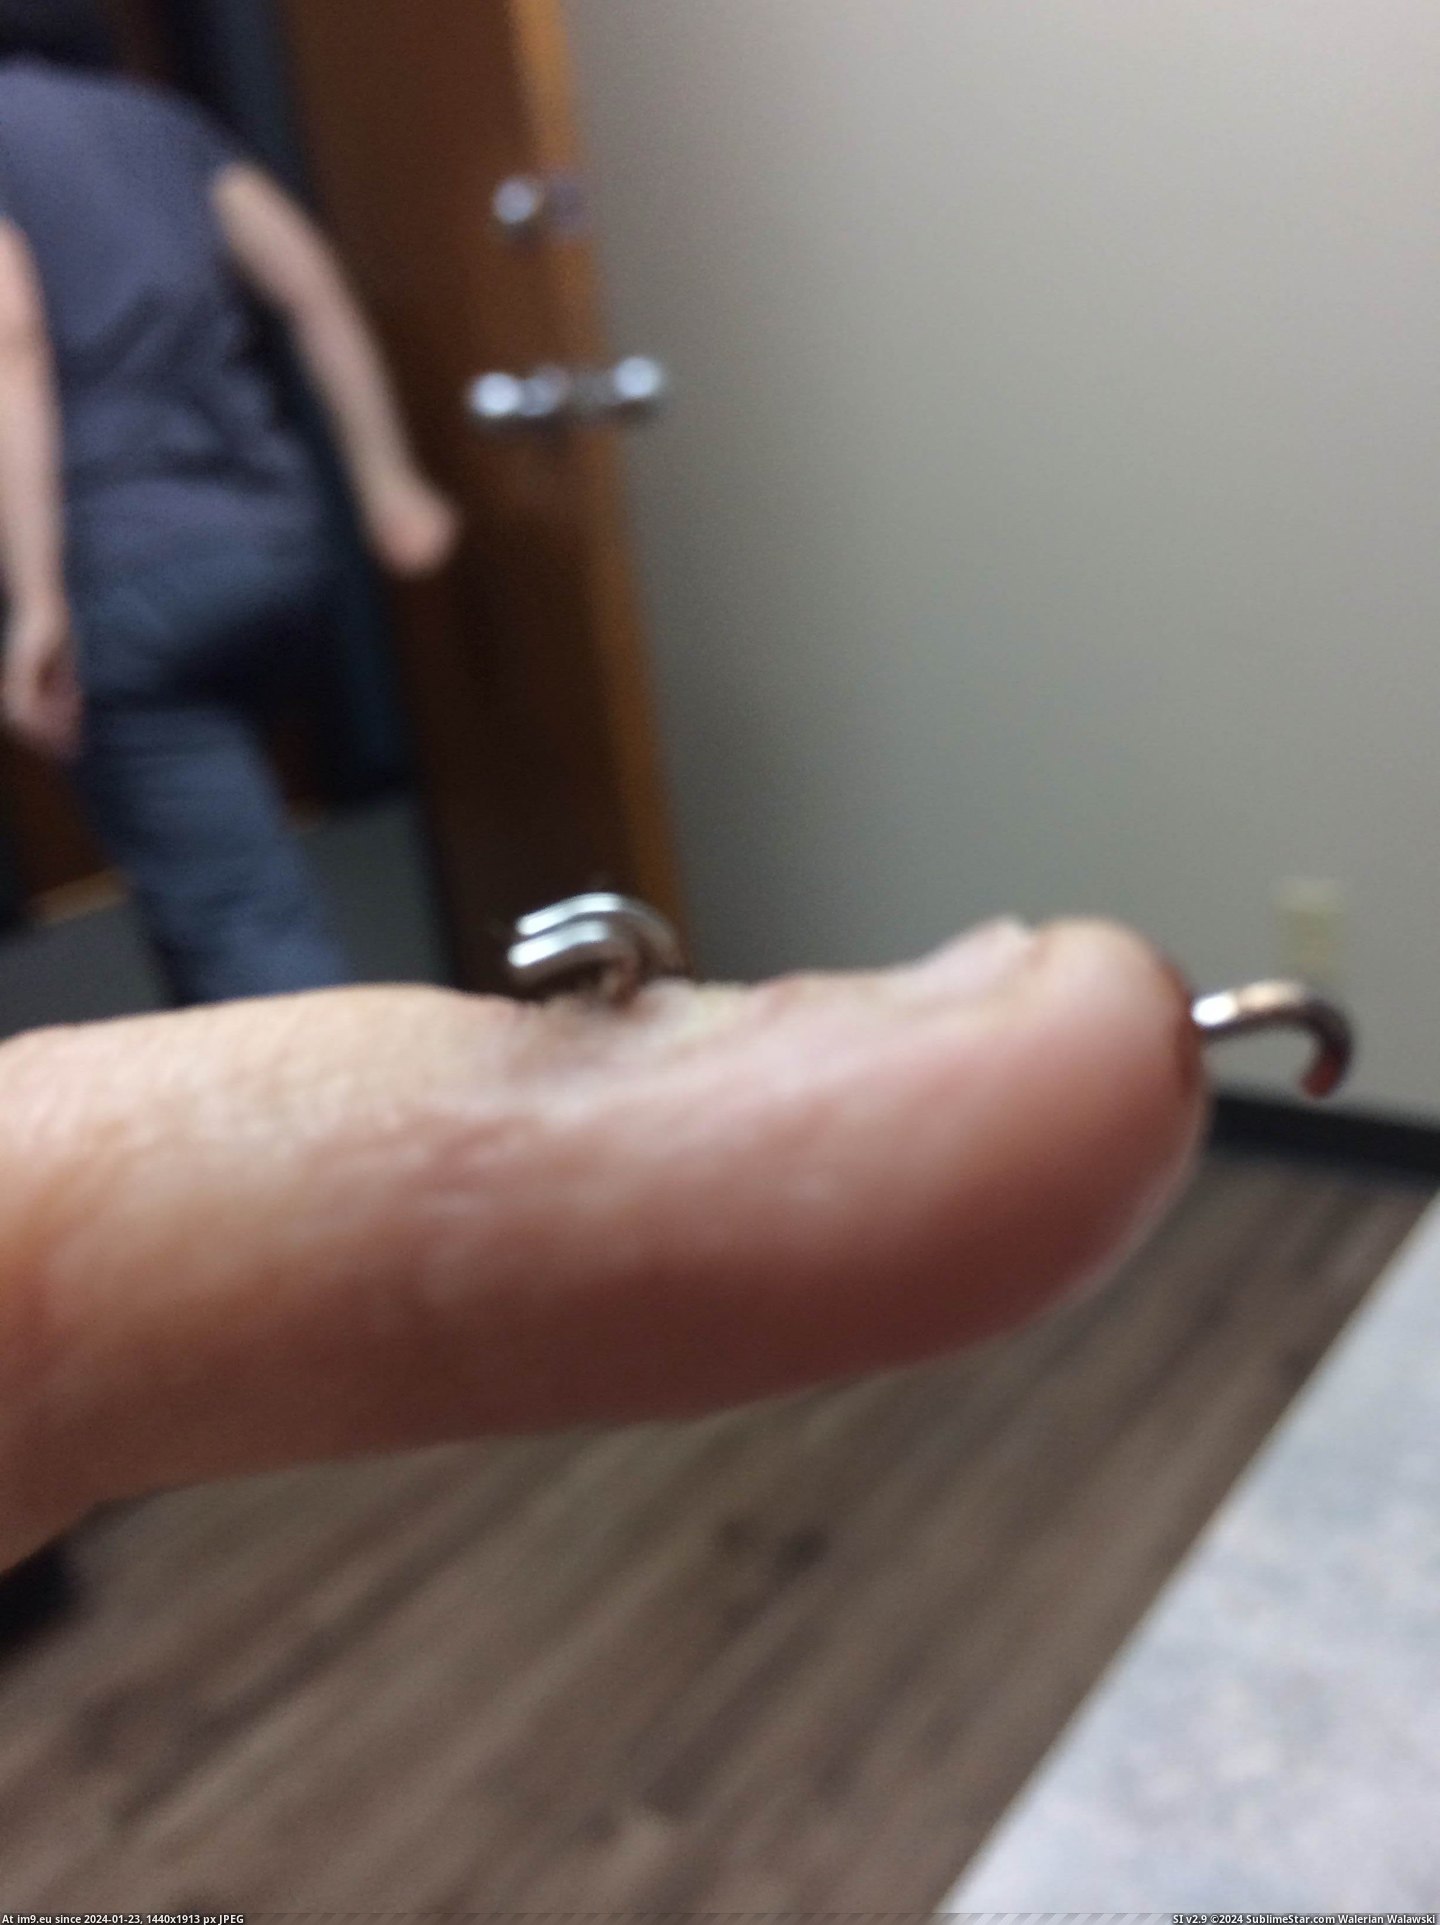 #Wtf #Wife #Pinky #Finger #Broken [Wtf] My Wife's Broken Pinky Finger 1 Pic. (Изображение из альбом My r/WTF favs))